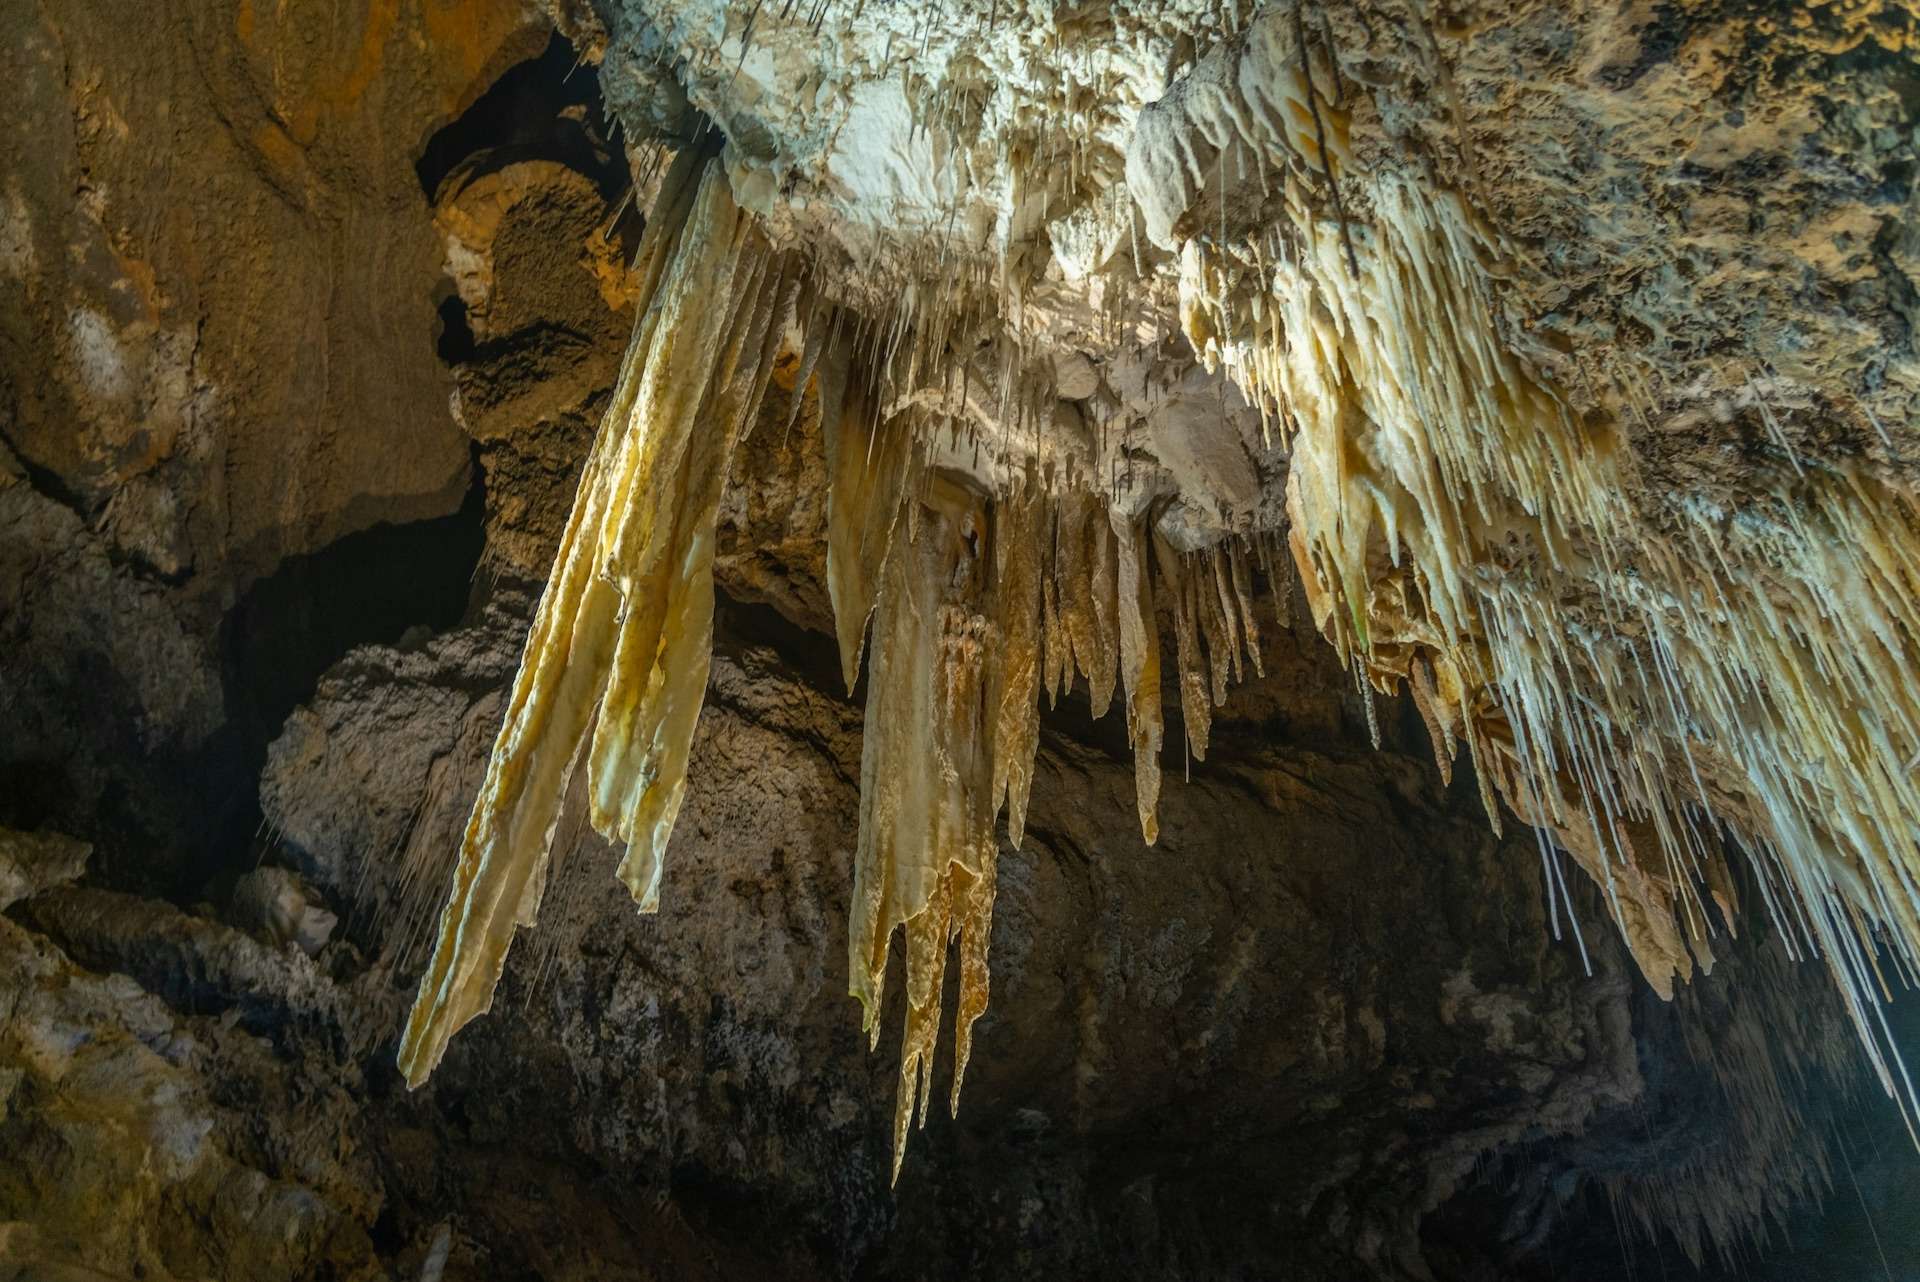 Marakoopa cave in Tasmania, Australia